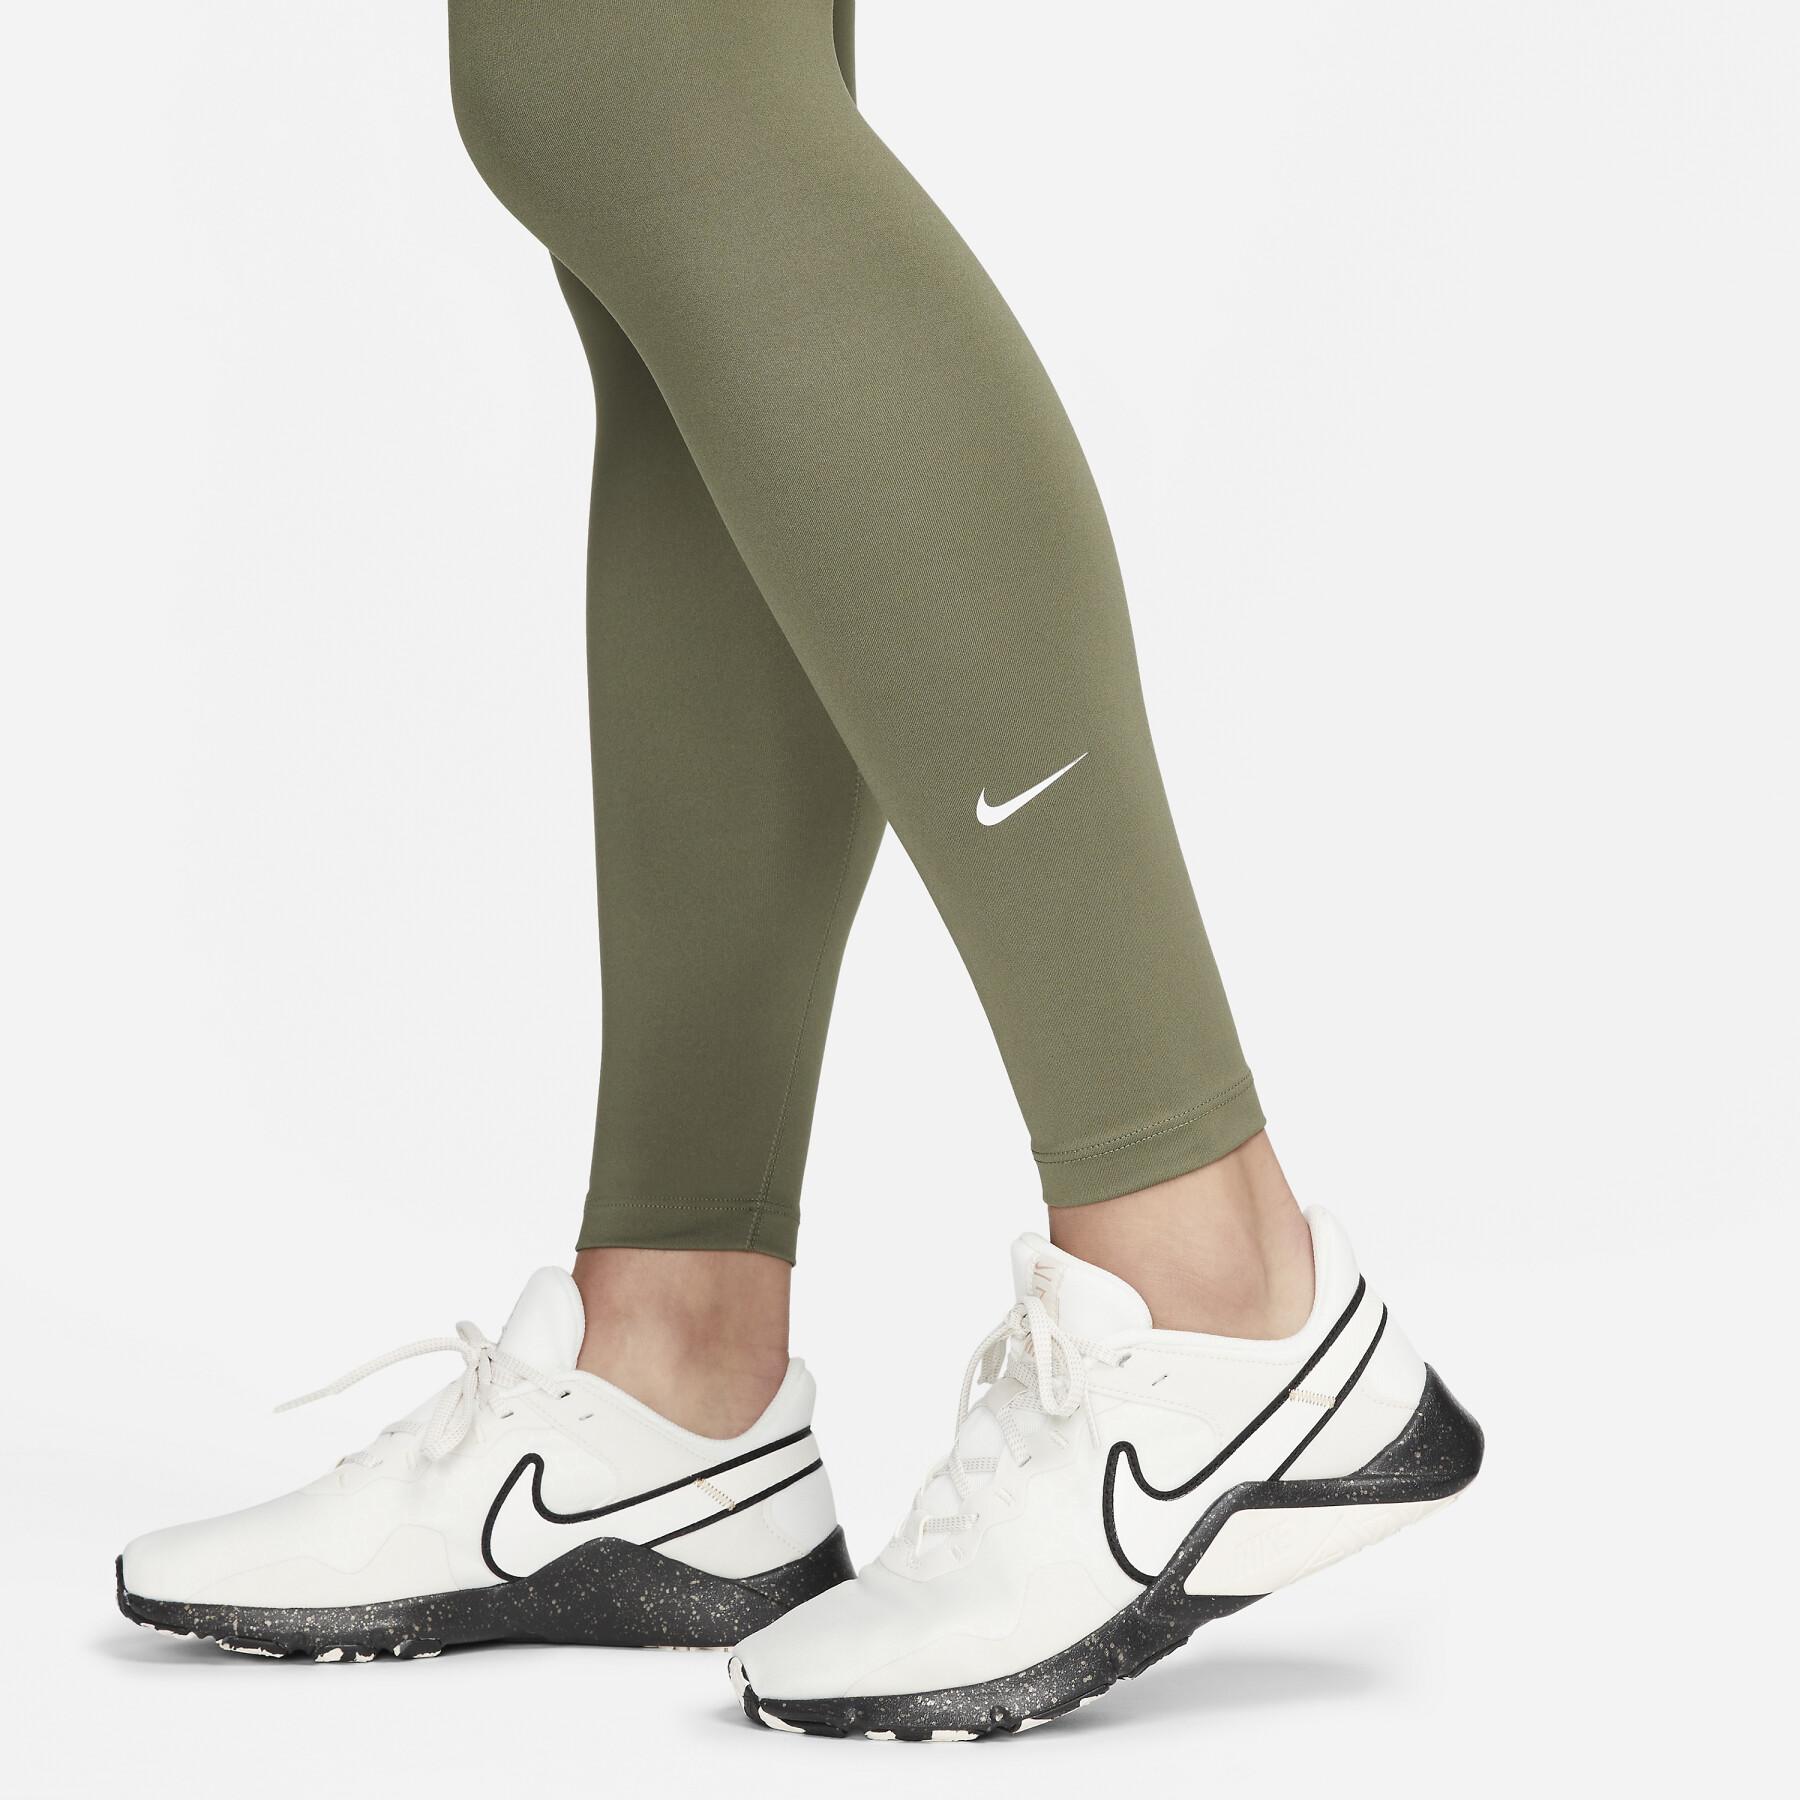 Legging woman Nike One Dri-Fit HR - Textile - Crossfit - Physical  maintenance